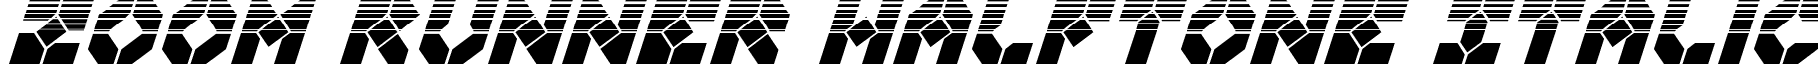 Zoom Runner Halftone Italic font - zoomrunnerhalfital.ttf